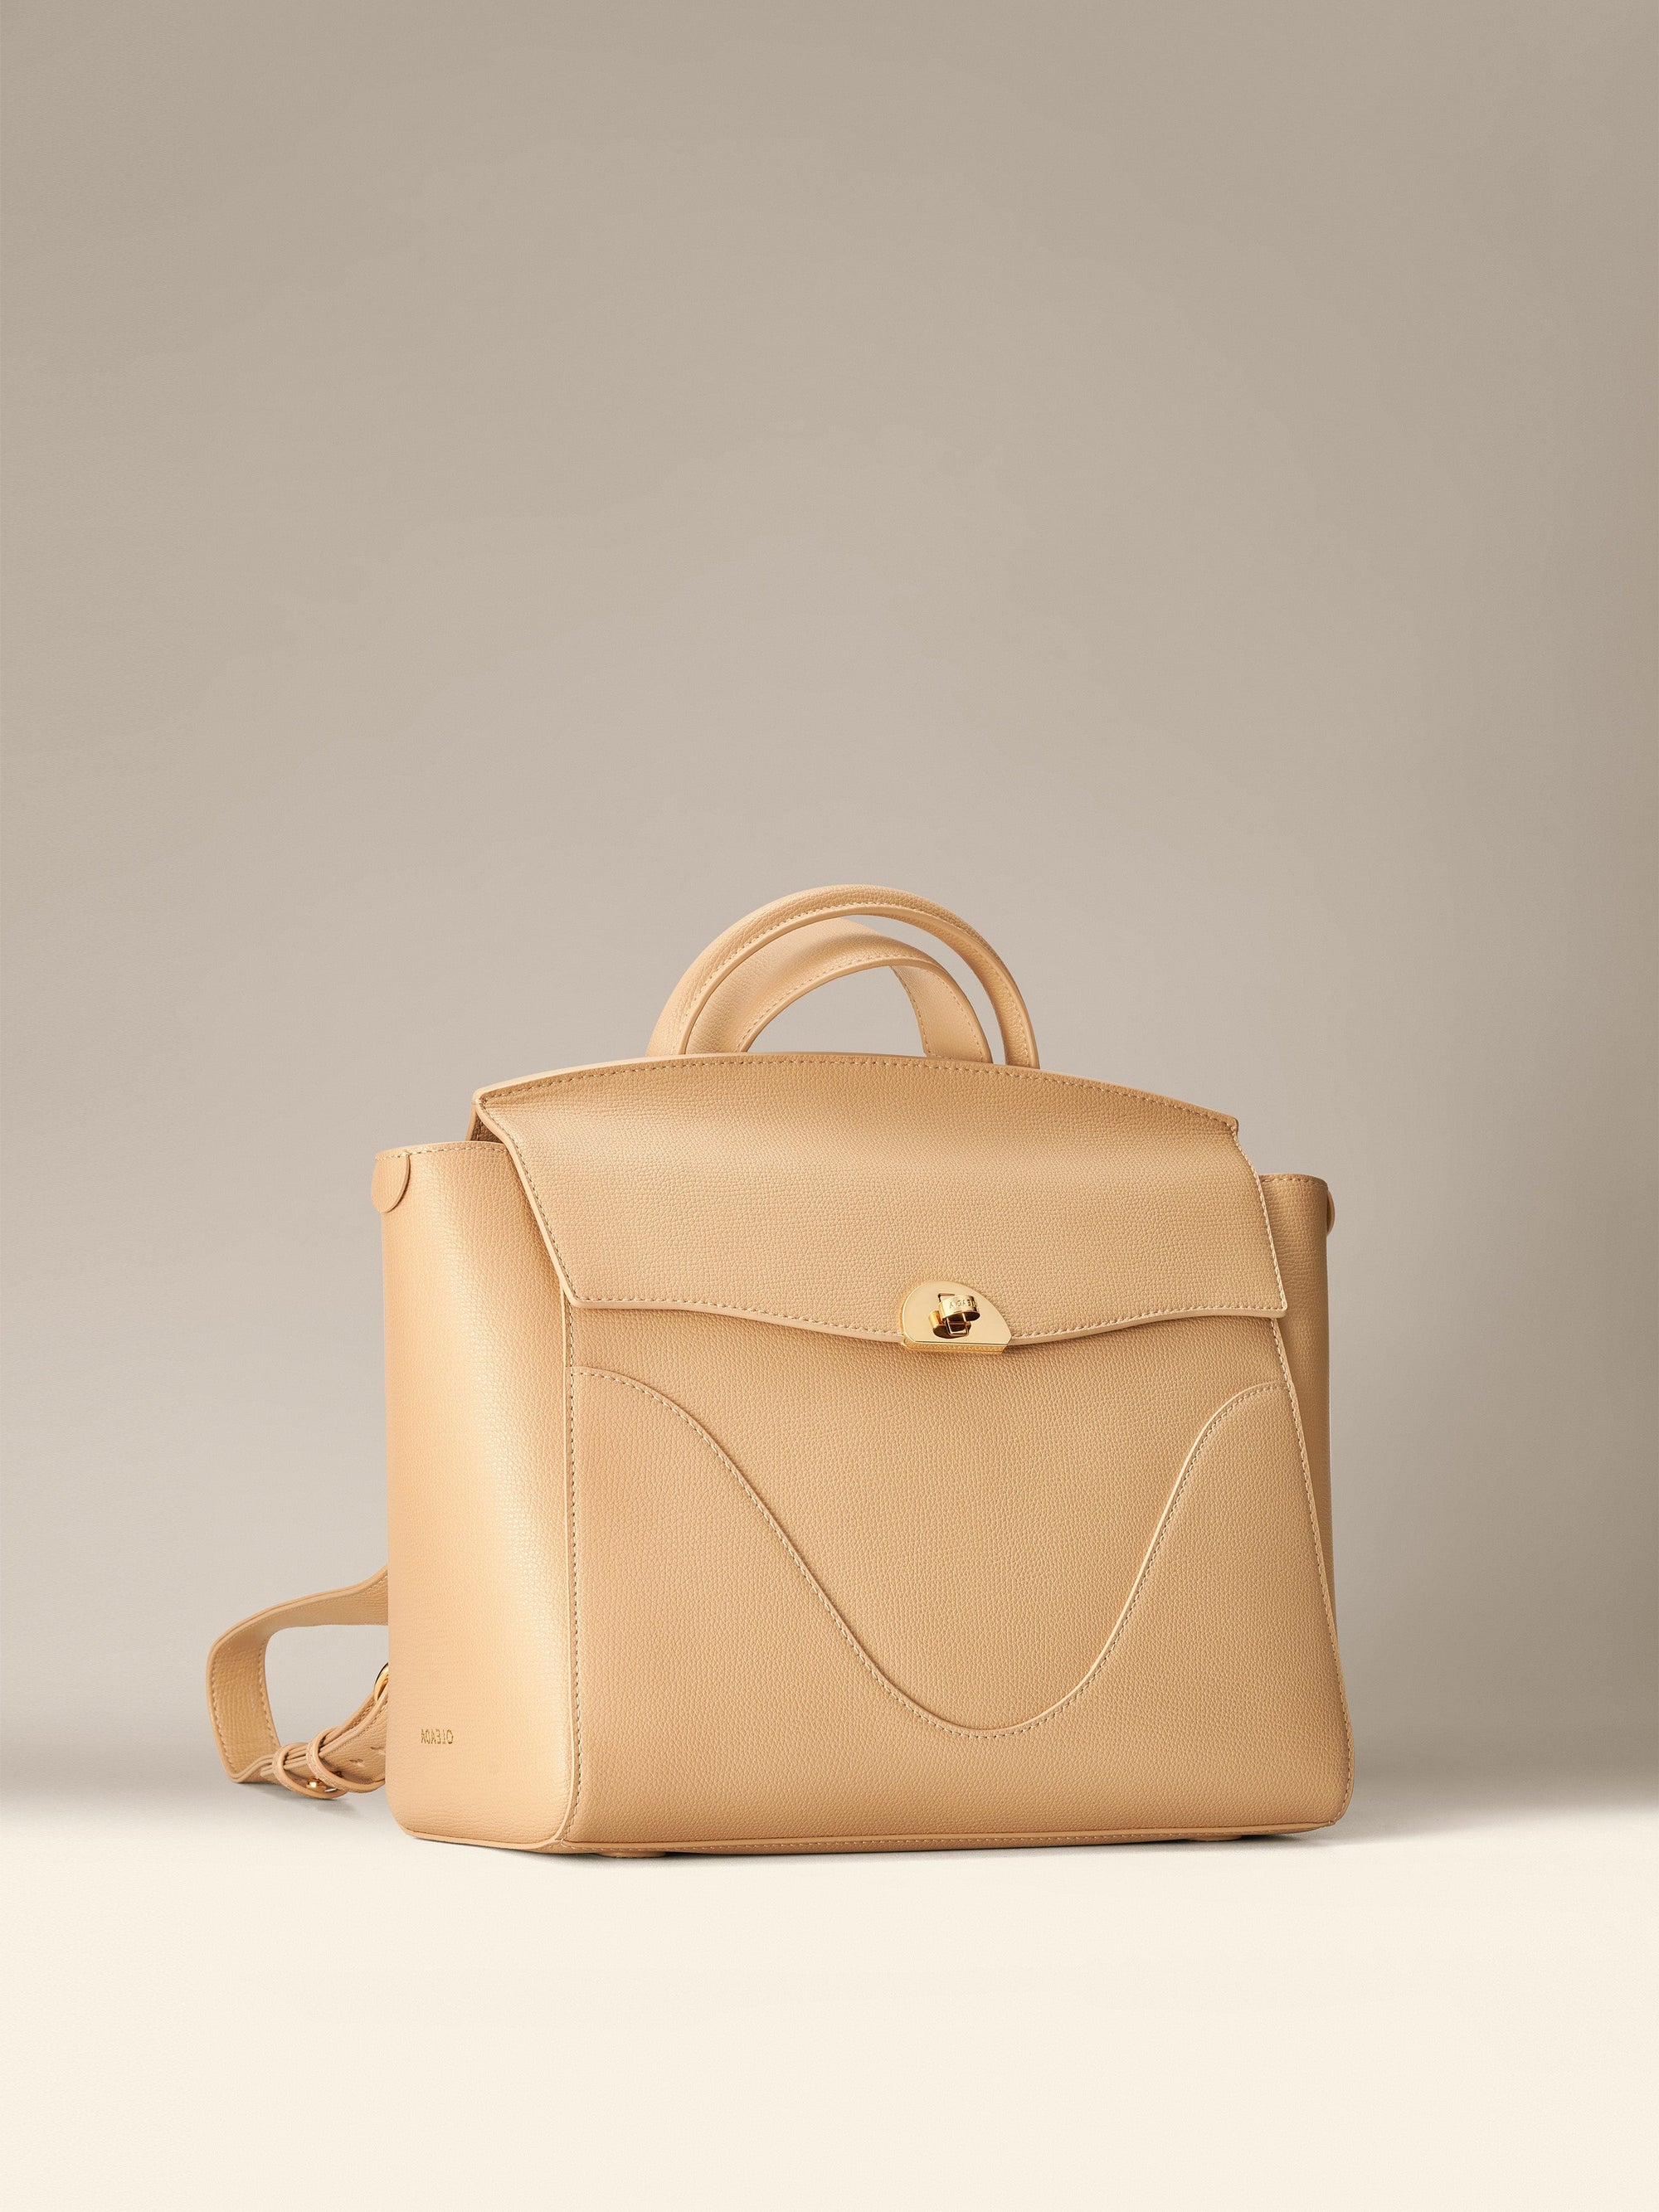 OLEADA Leather Women Work Bag > Convertible To Business Backpack Bag > 13 Inch Laptop Bag > Crossbody Shoulder Bag > Luxury Travel Backpack Wavia Bag Champagne